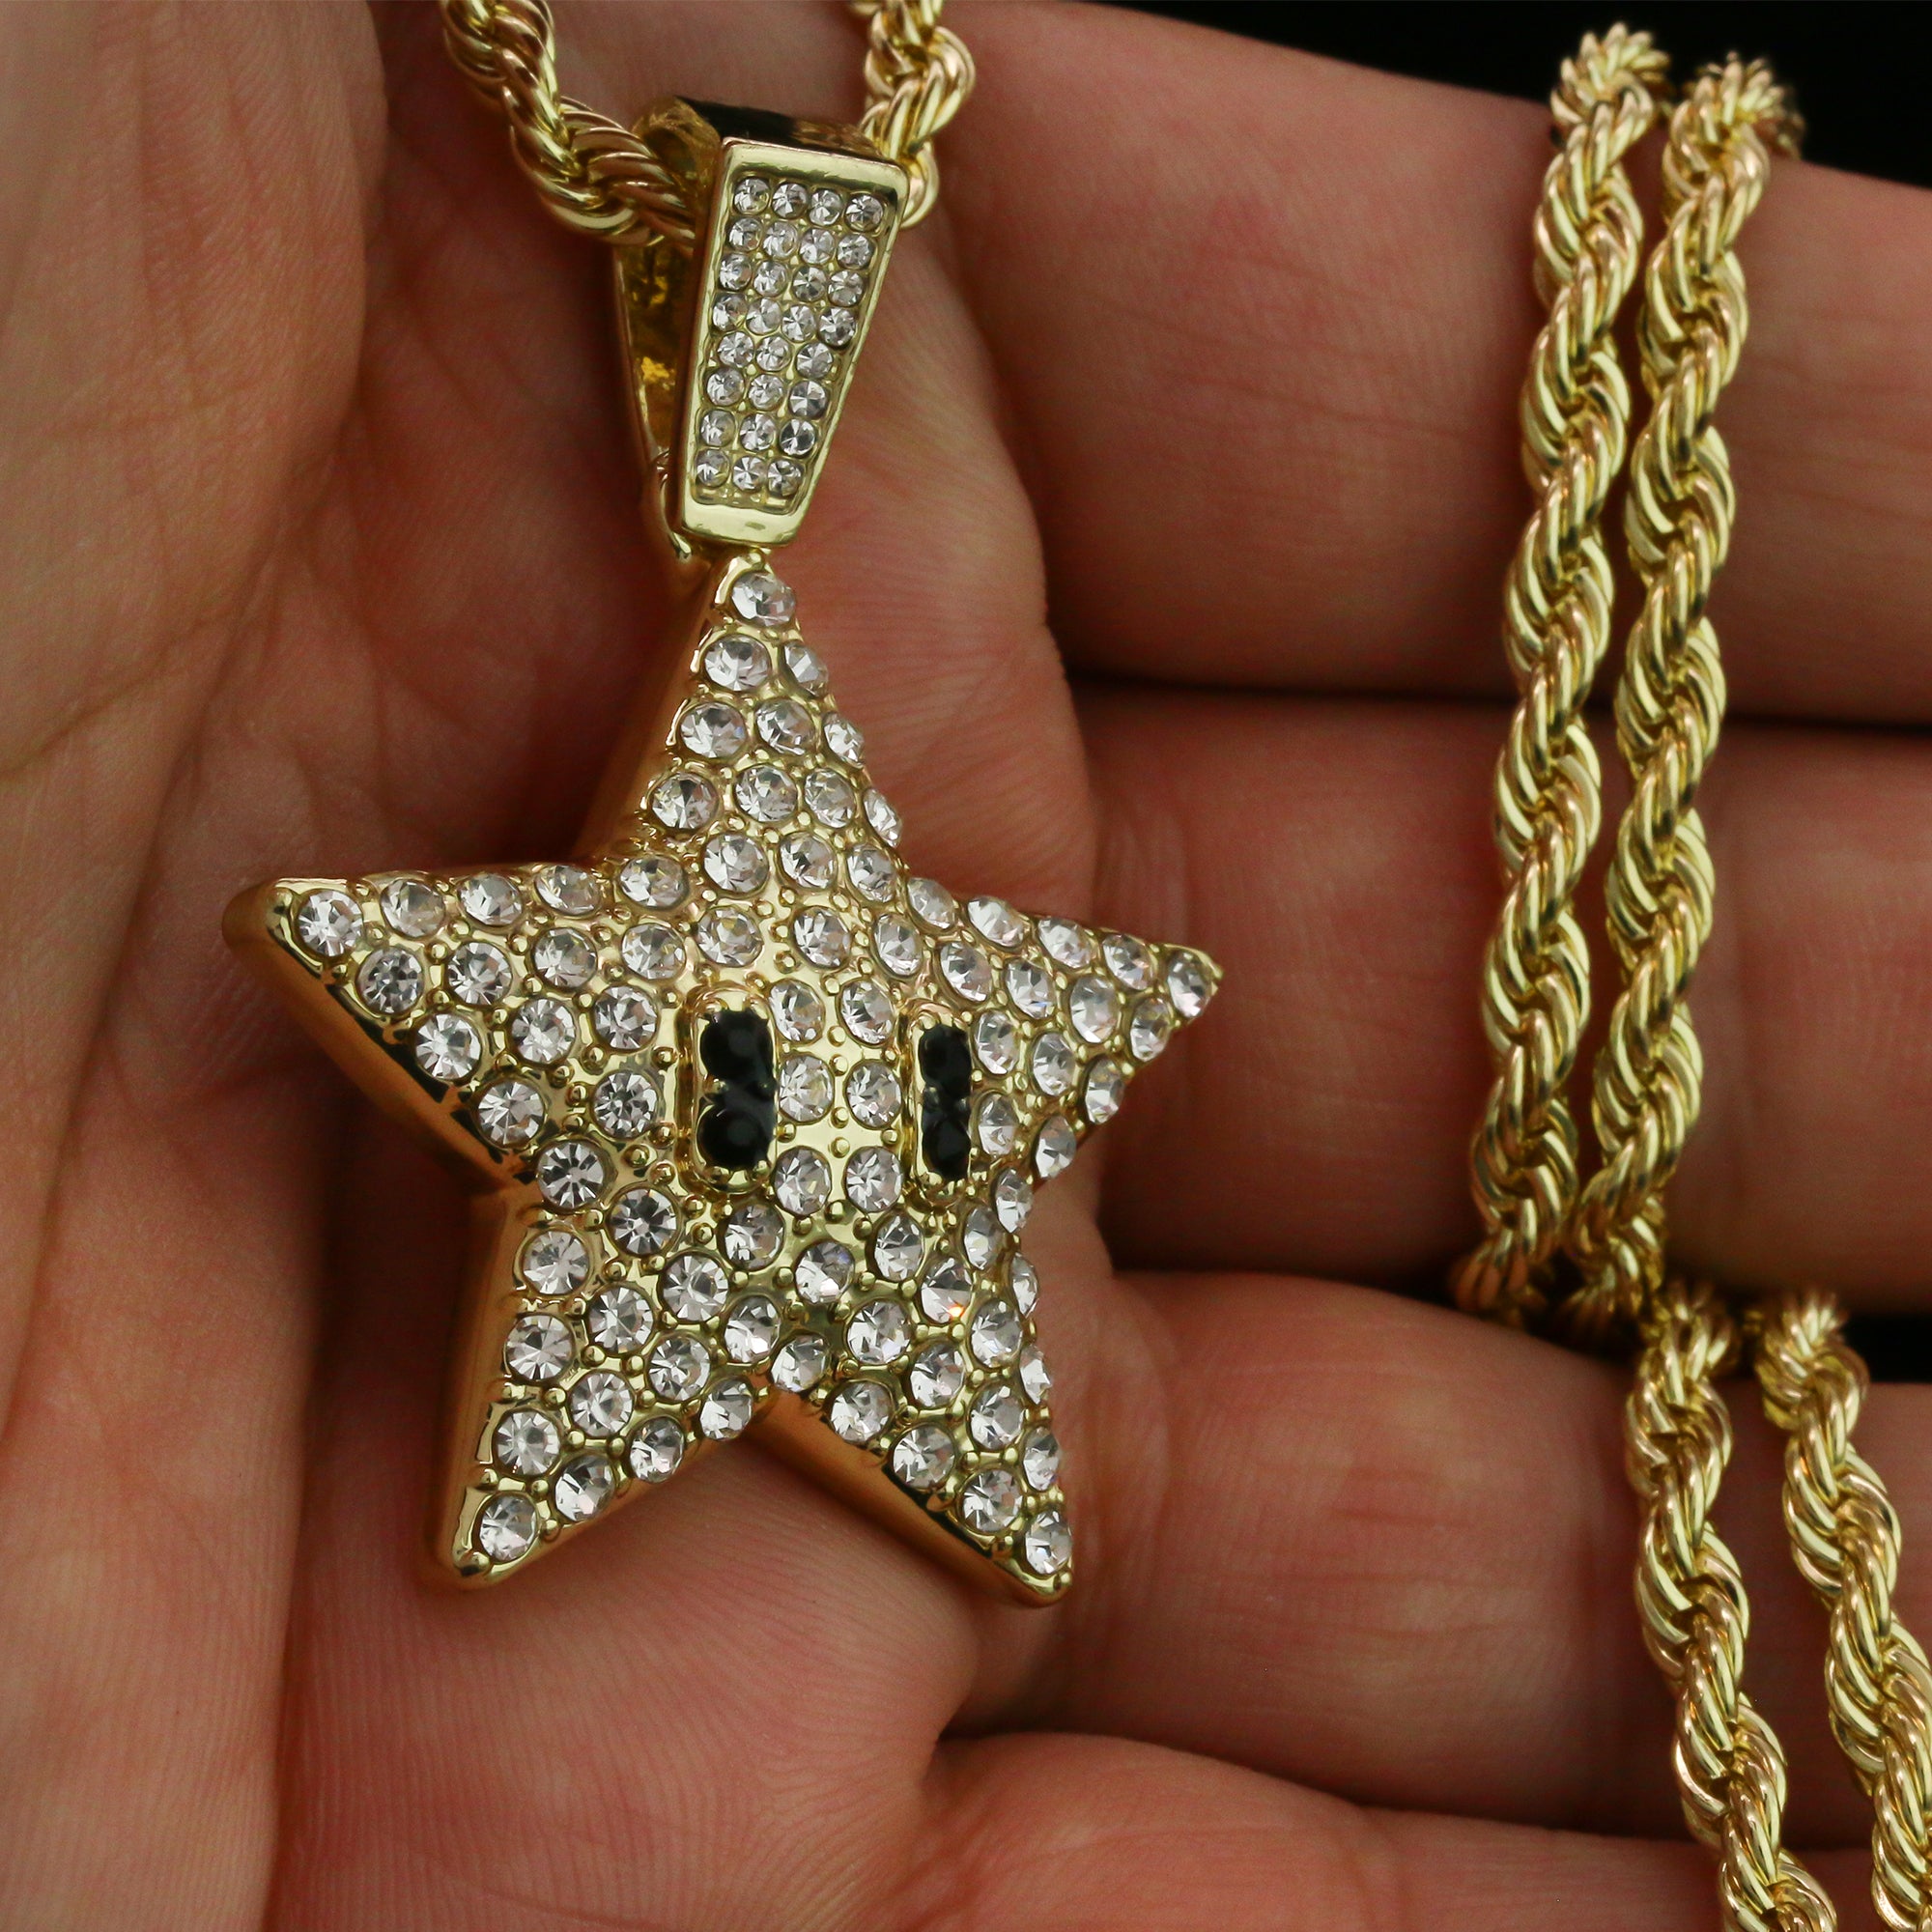 Cartoon Pop Star Pendant Rope Necklace Chain Men's Hip Hop 18k Cz Jewelry